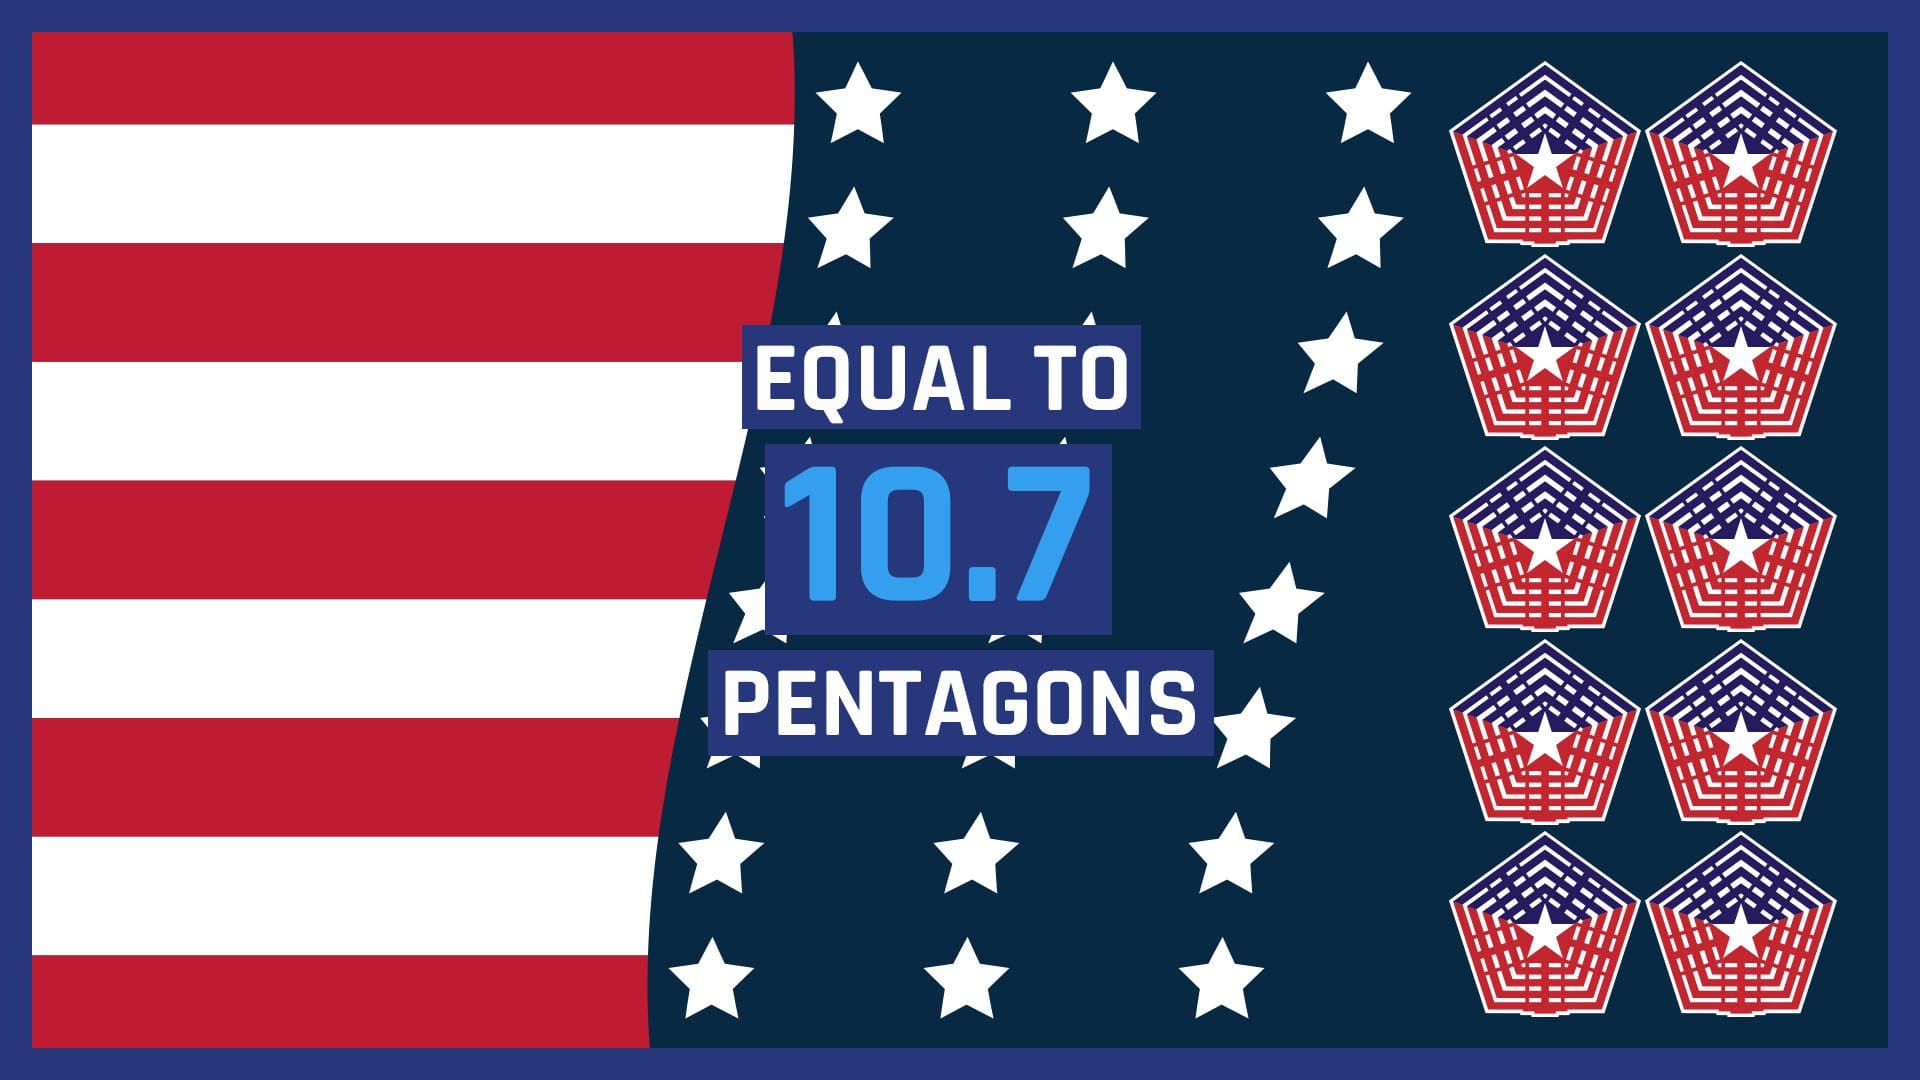 Pentagon comparison graphic